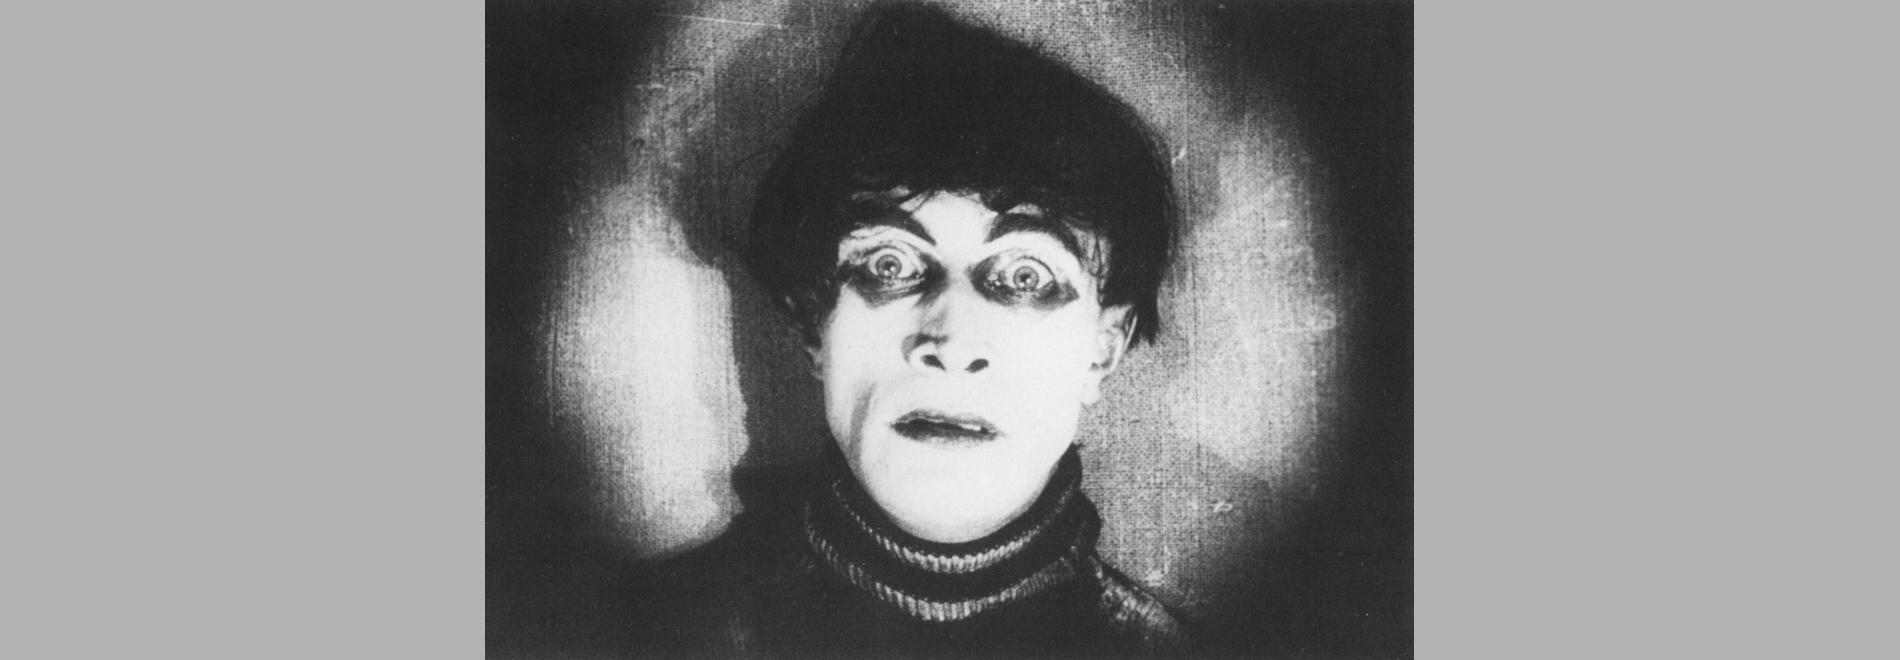 Das Kabinett des Dr. Caligari (Robert Wiene, 1919)